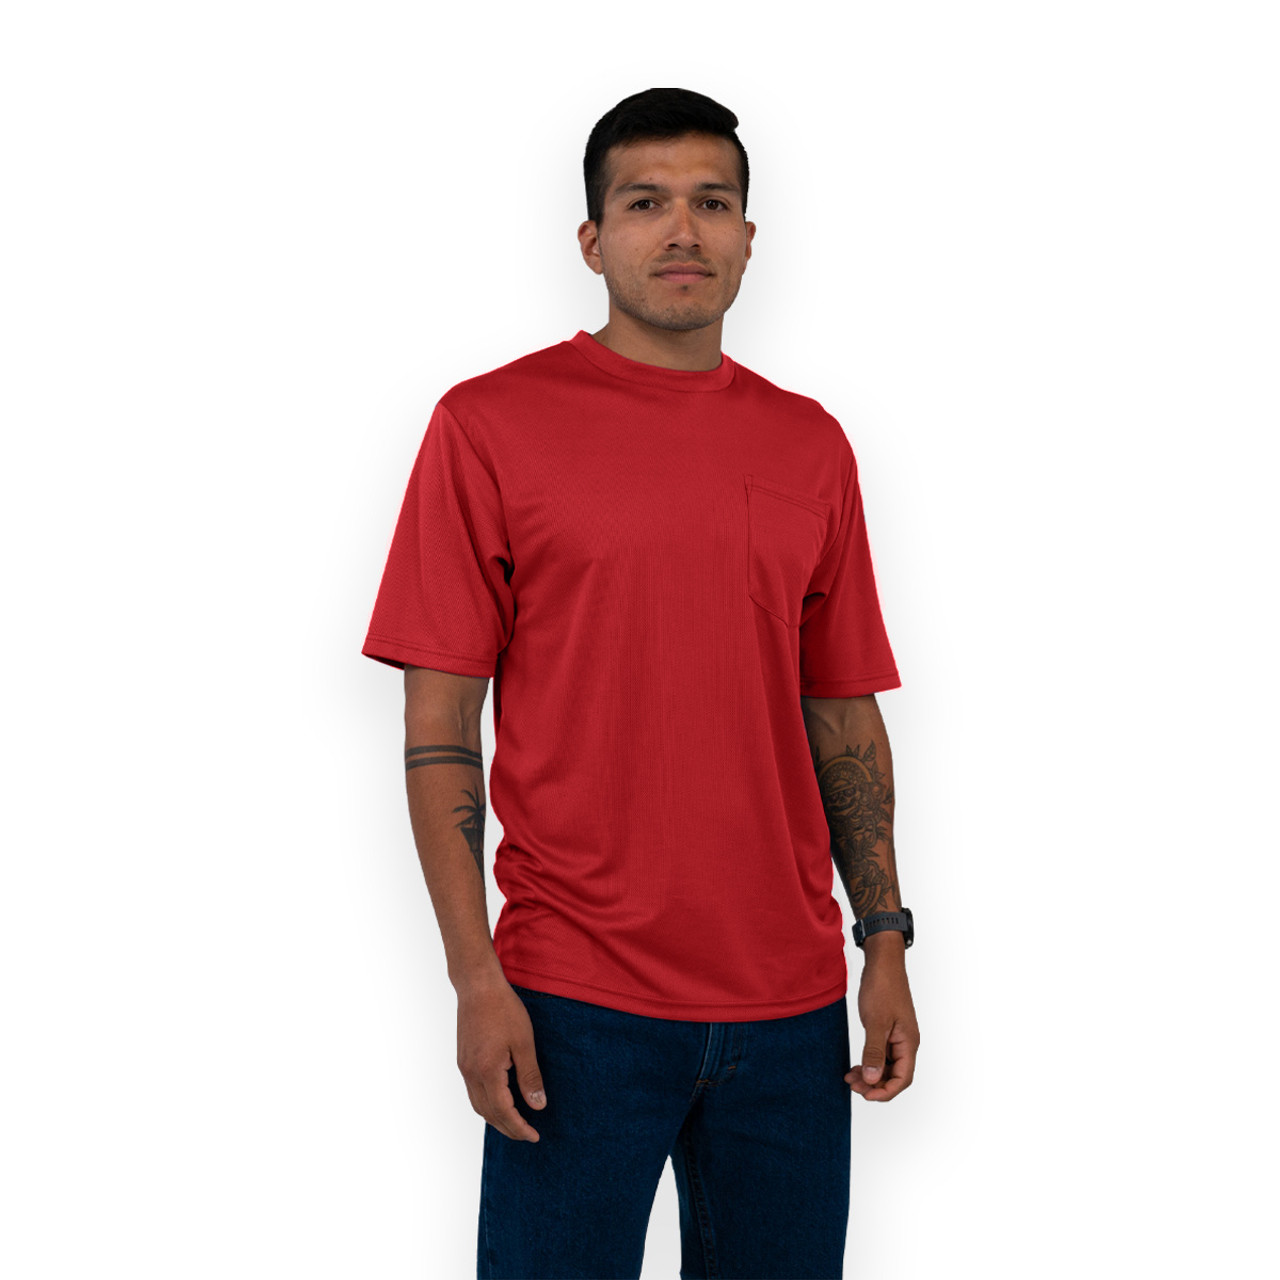 KEY Comfort Performance Tee: Men's T-Shirt with Pocket